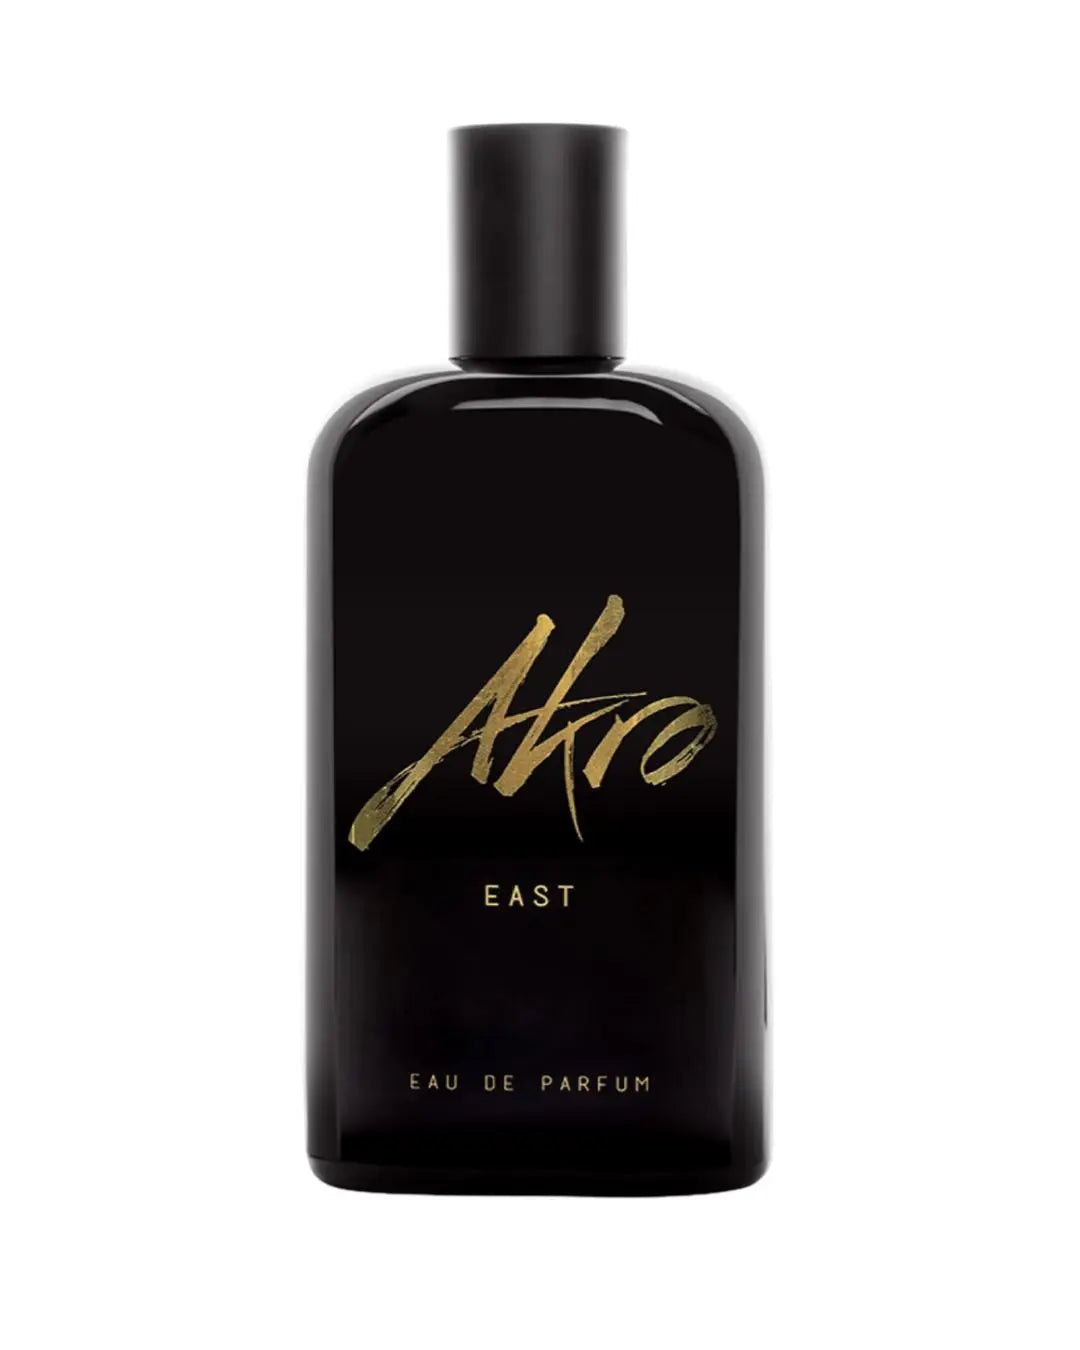 Akro East - 100ml eau de parfum